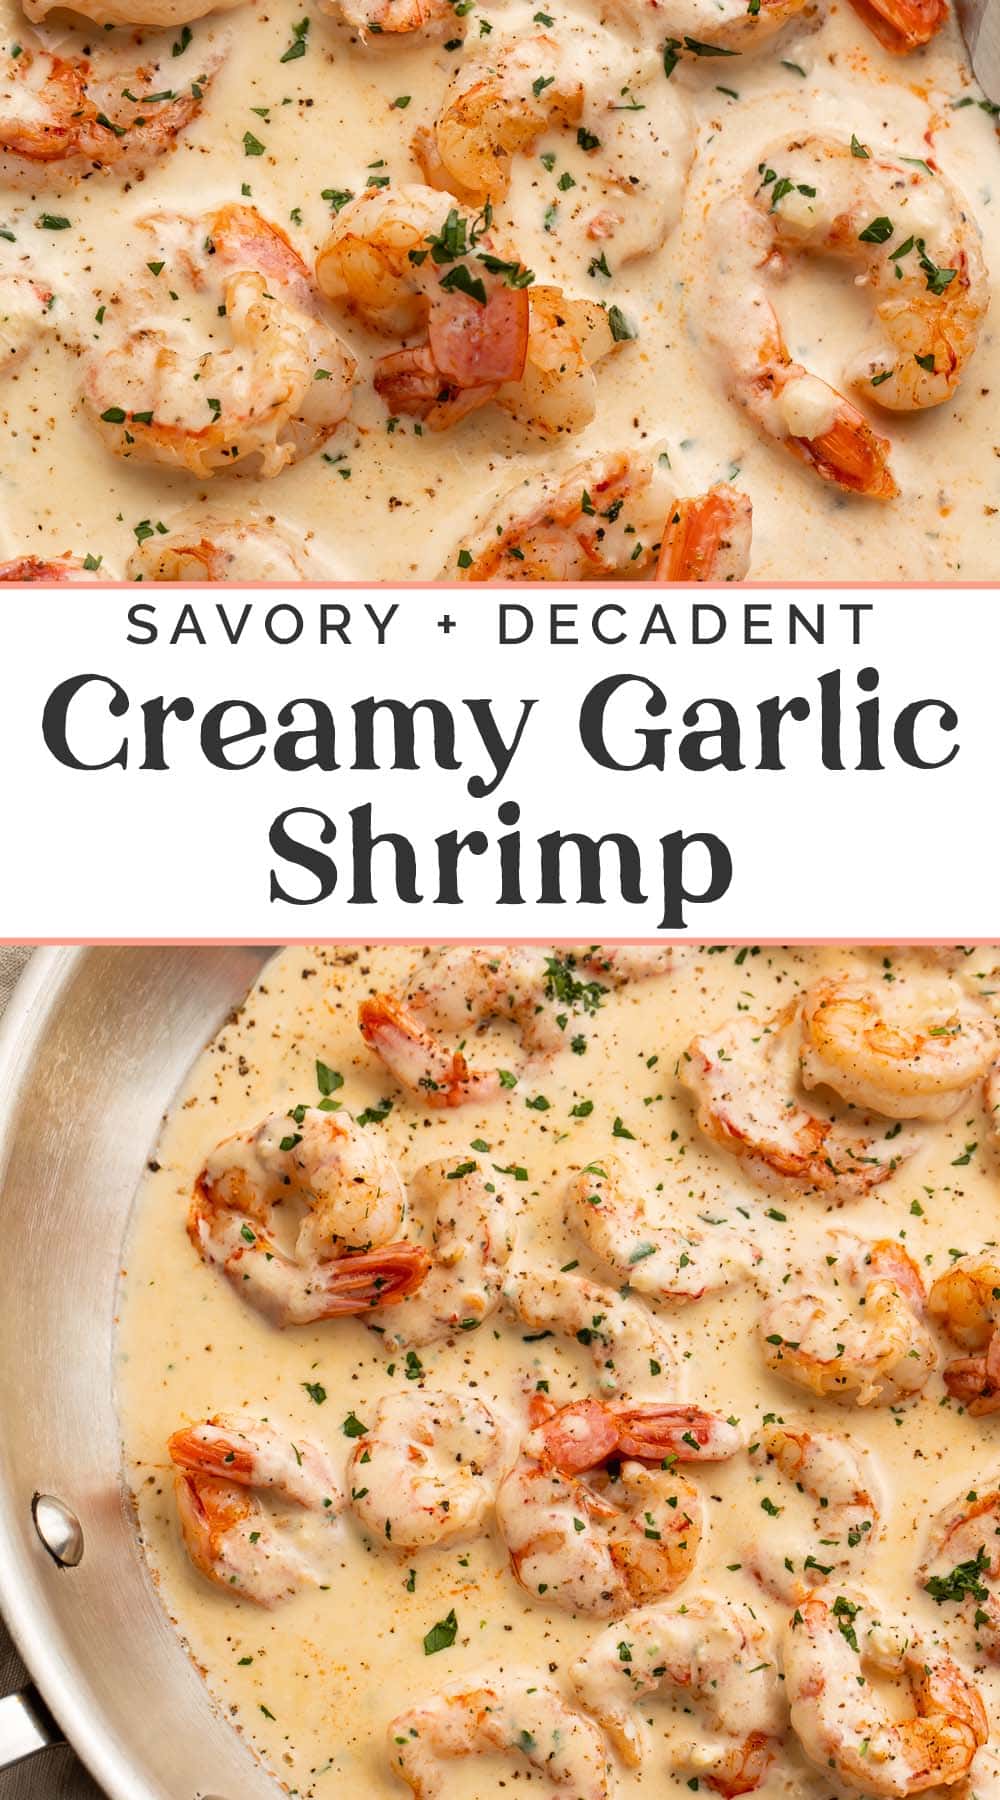 Pin graphic for creamy garlic shrimp.